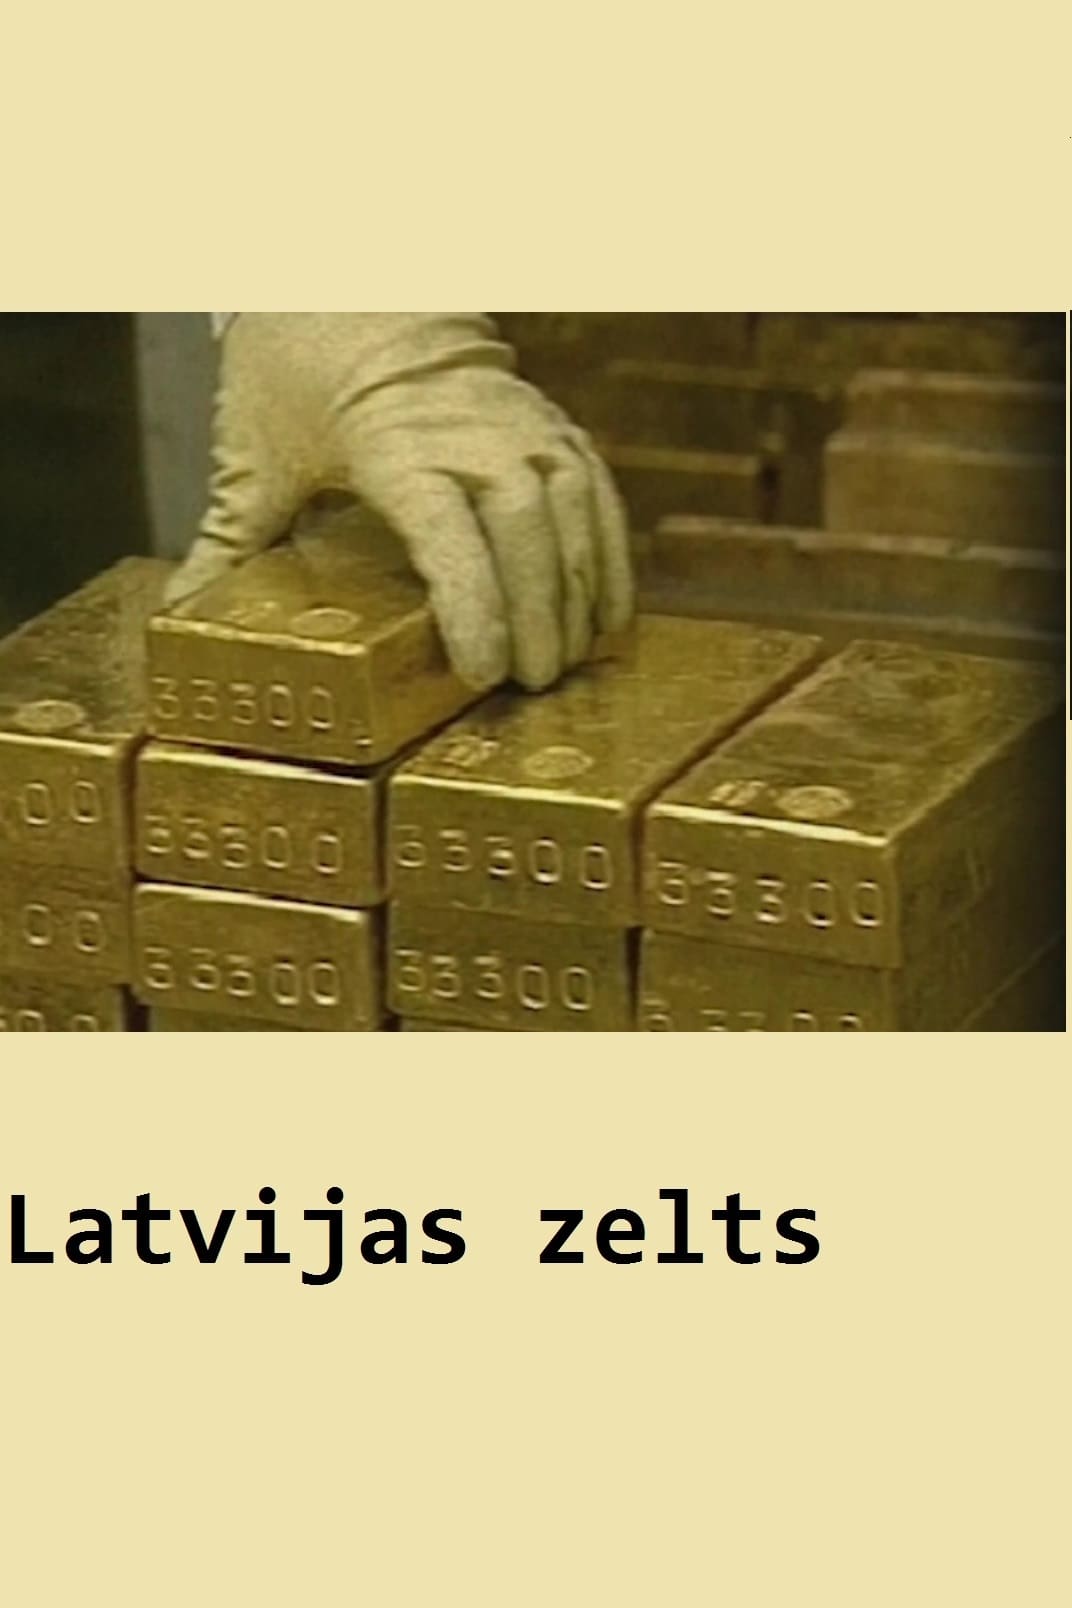 Latvian Gold